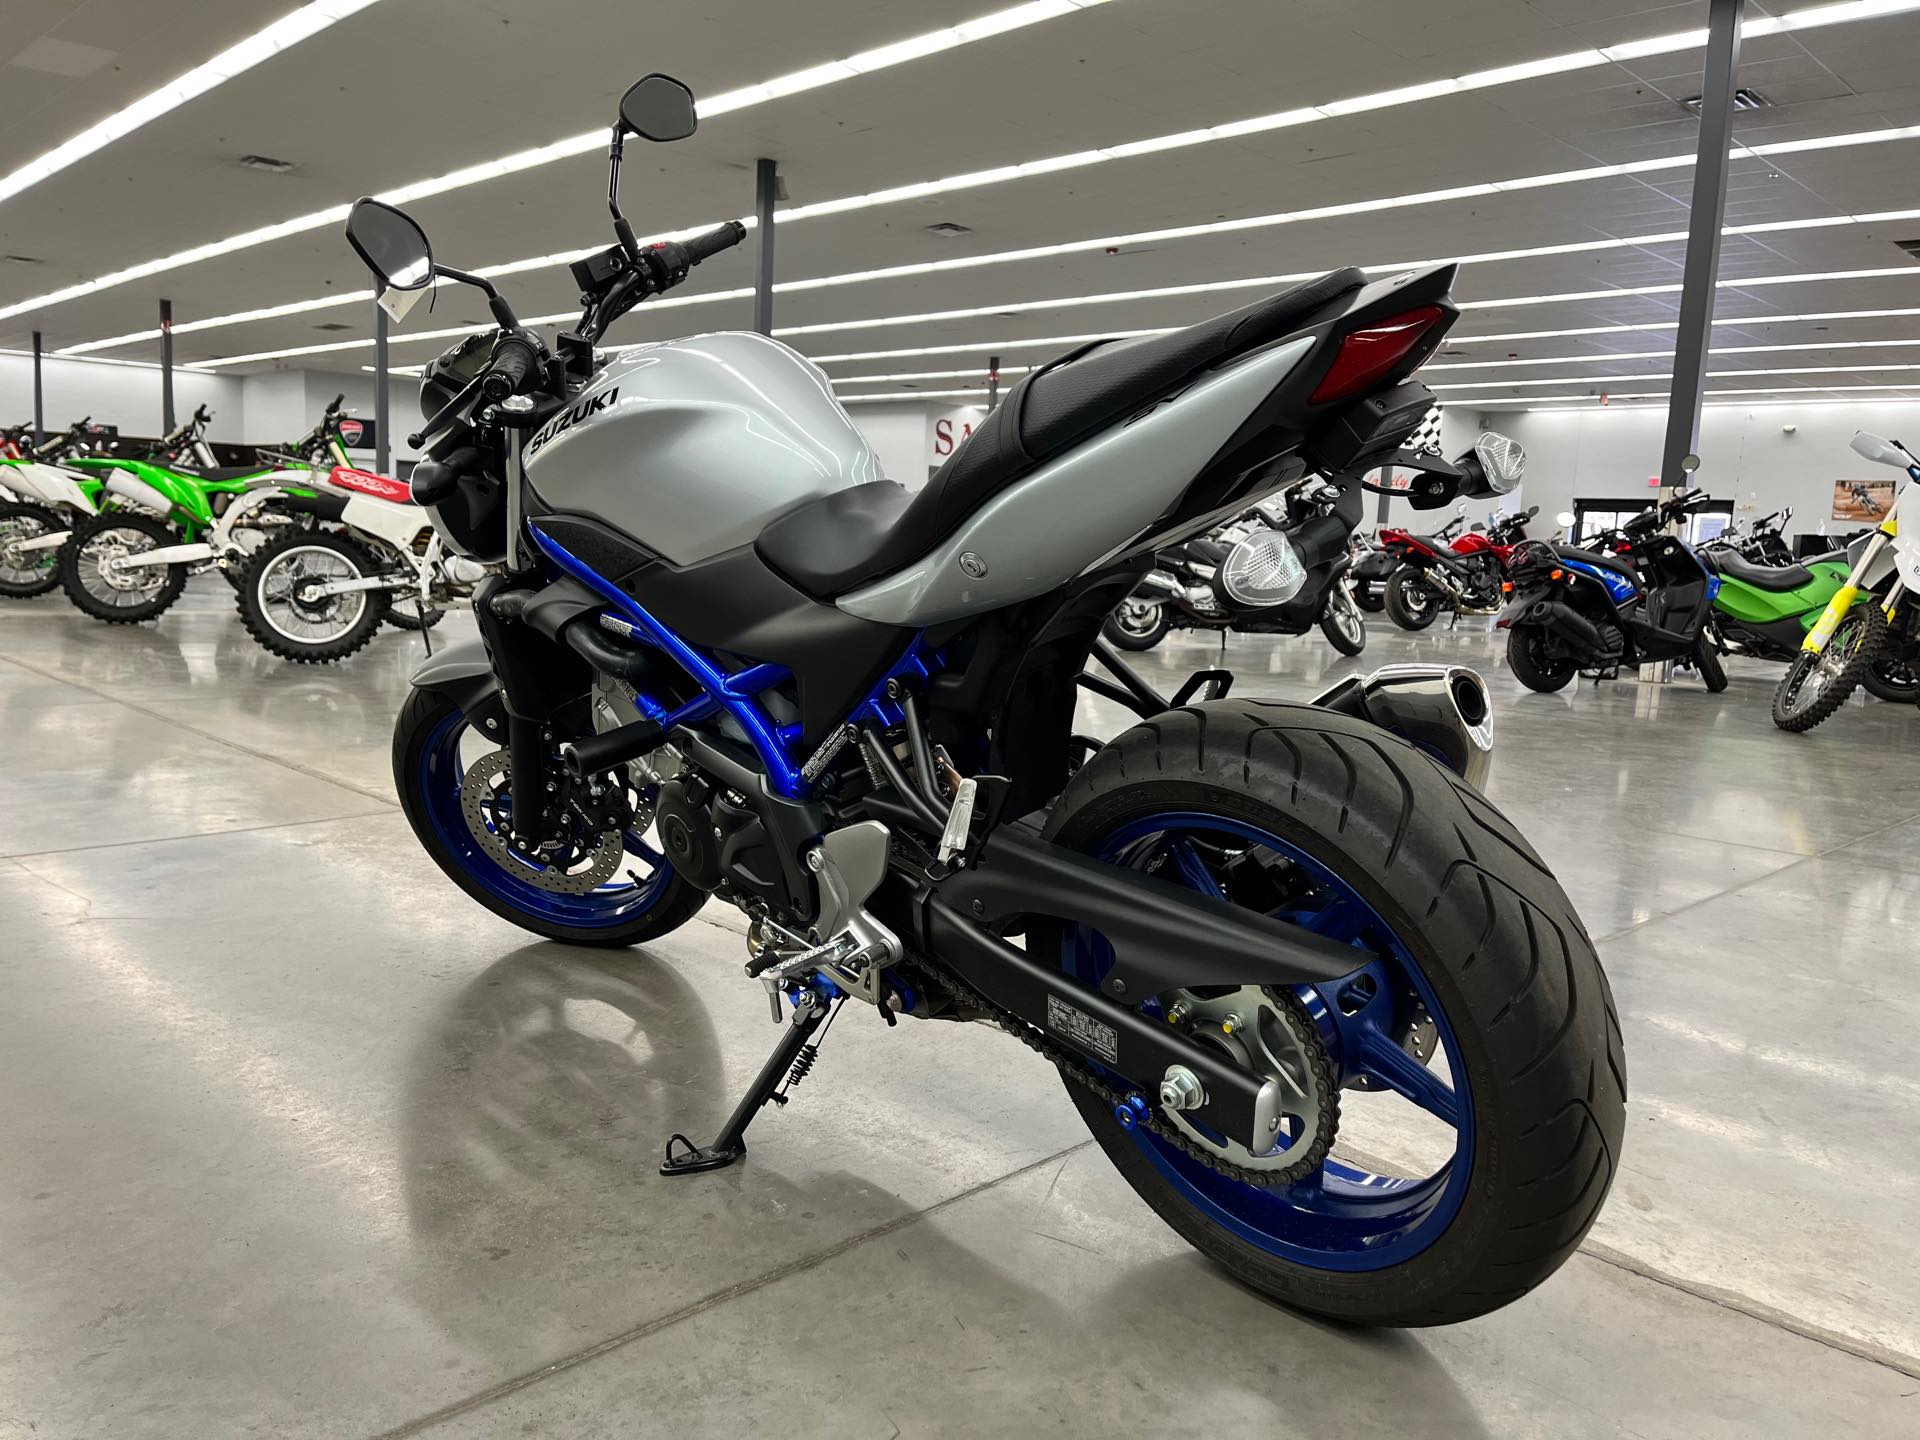 2020 Suzuki SV 650 at Aces Motorcycles - Denver